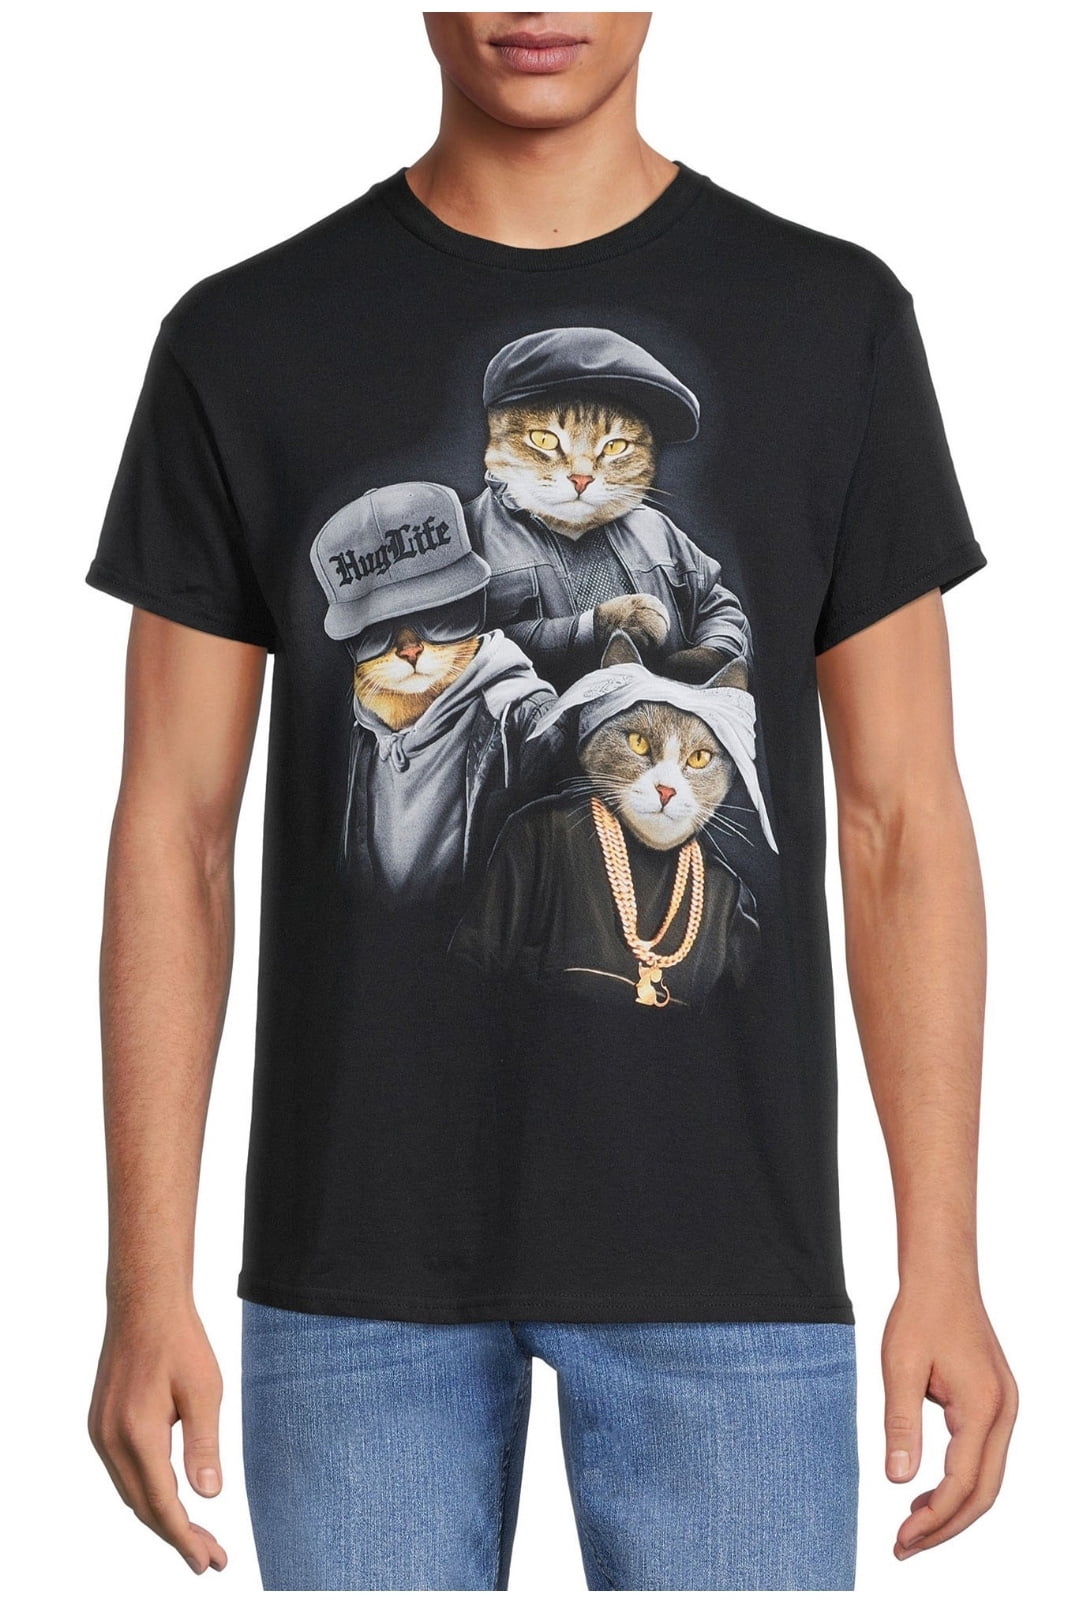 Hug Life Kitty Cat Trio Black Graphic T-Shirt - Small 